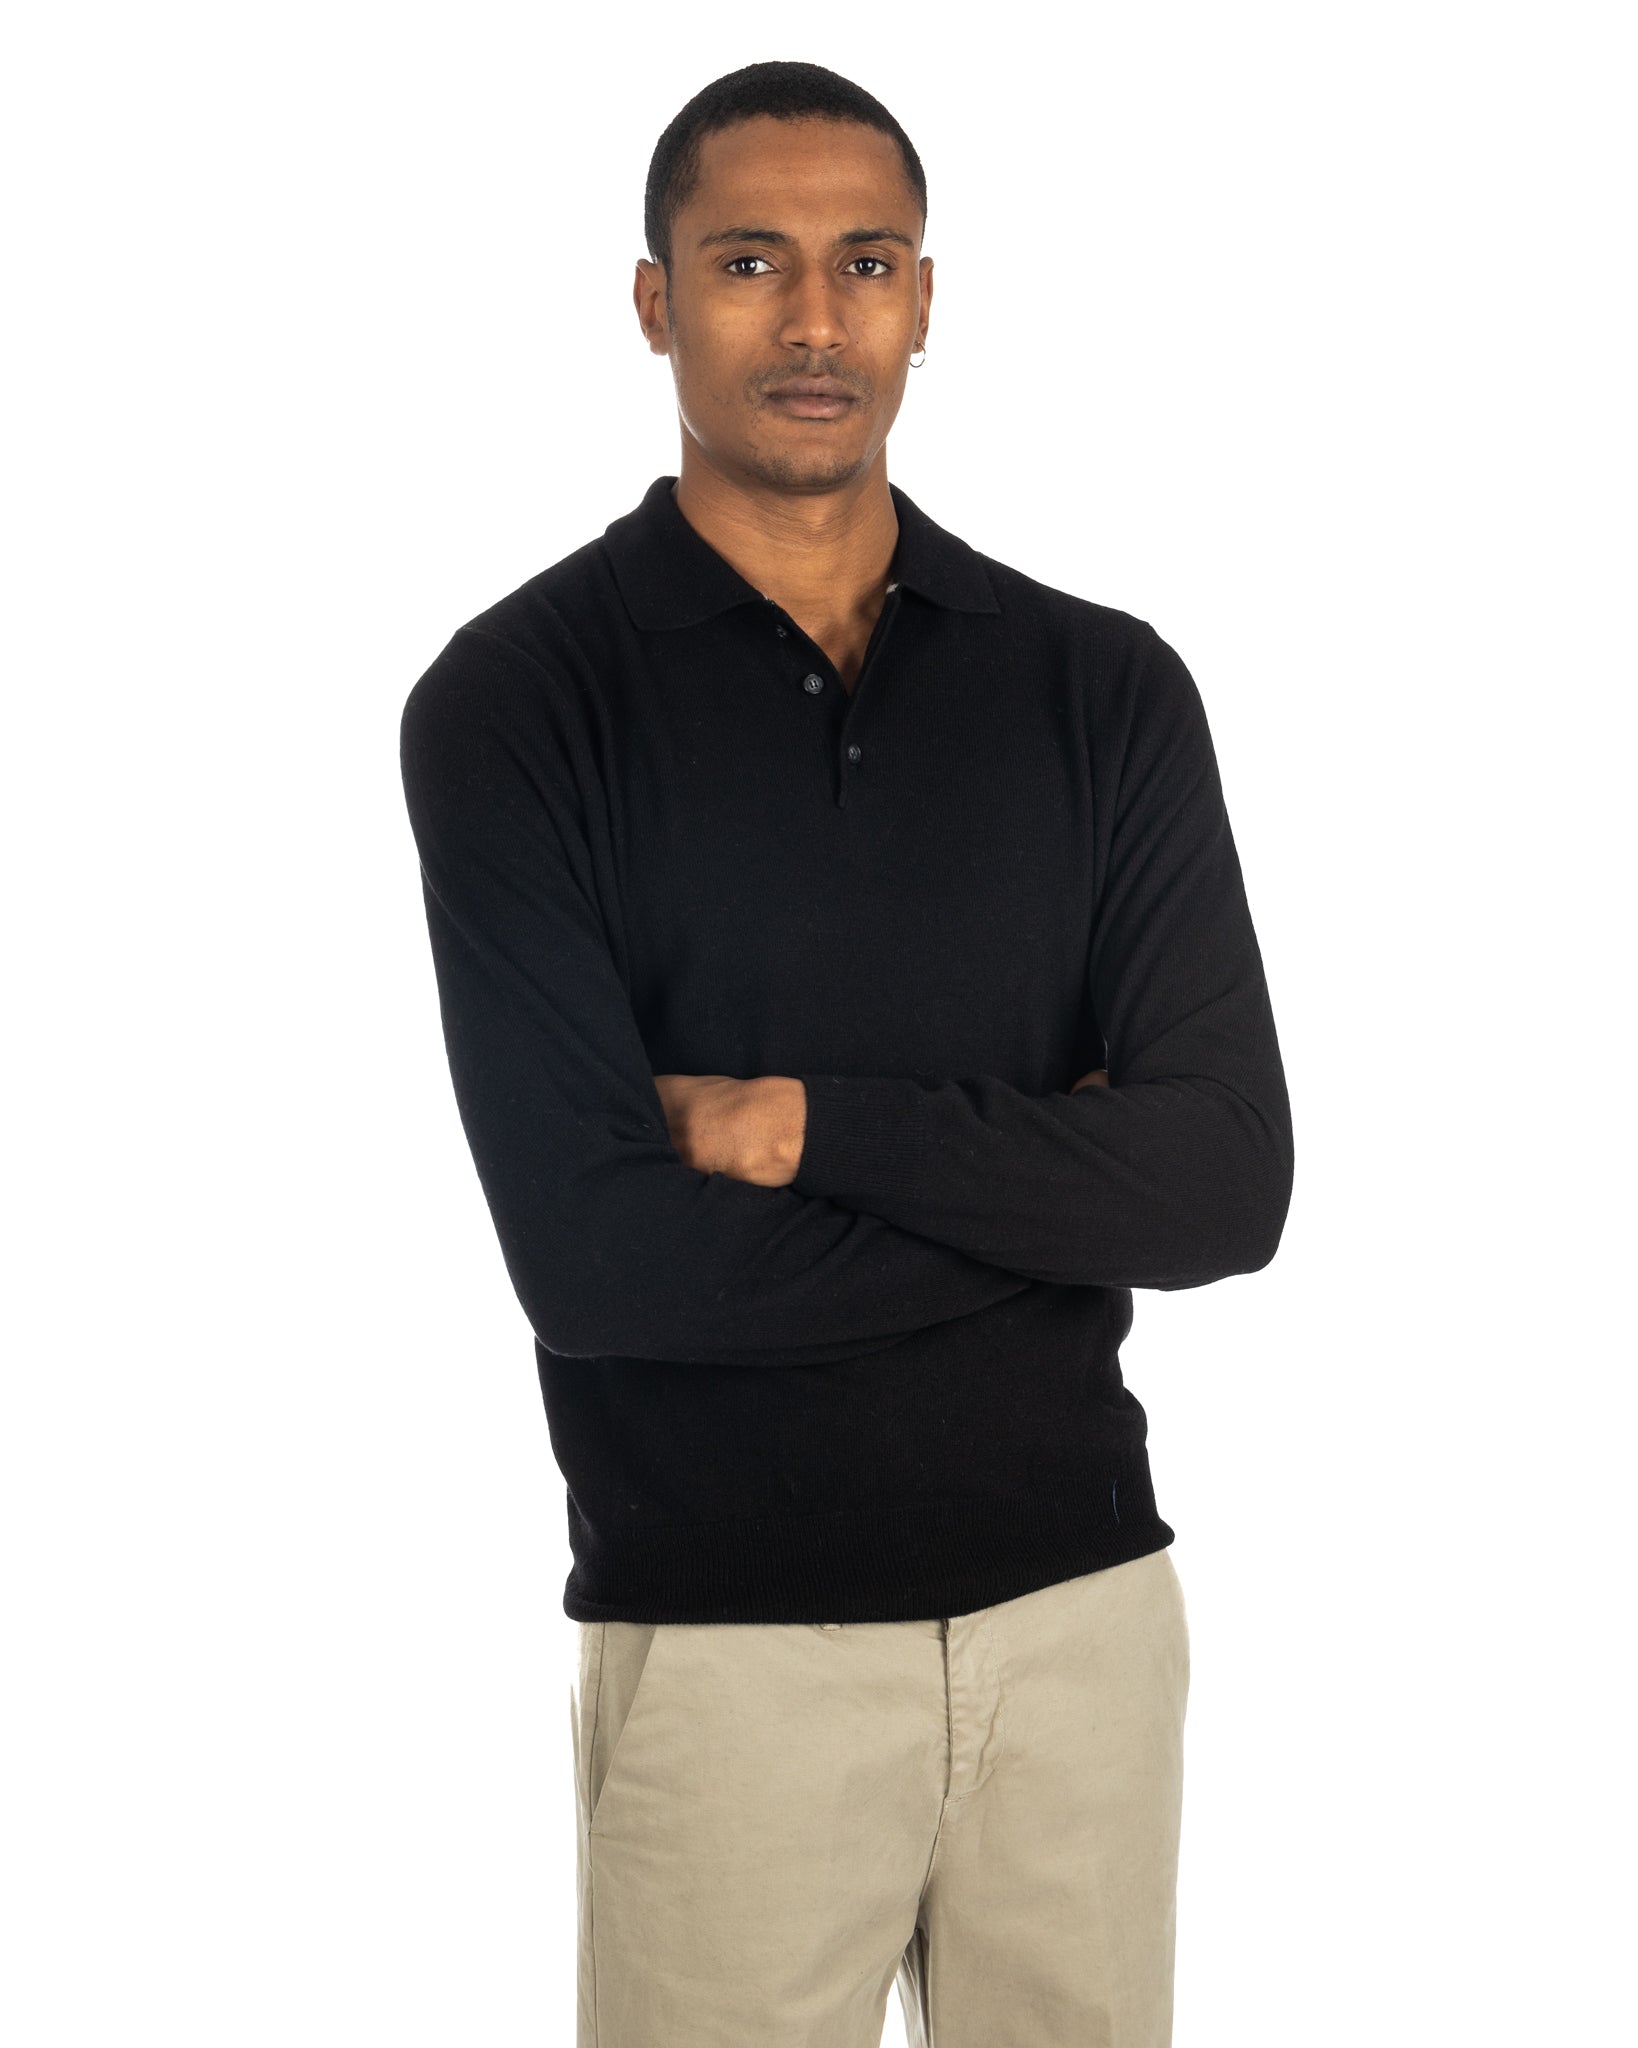 Tiger - black cashmere blend polo shirt